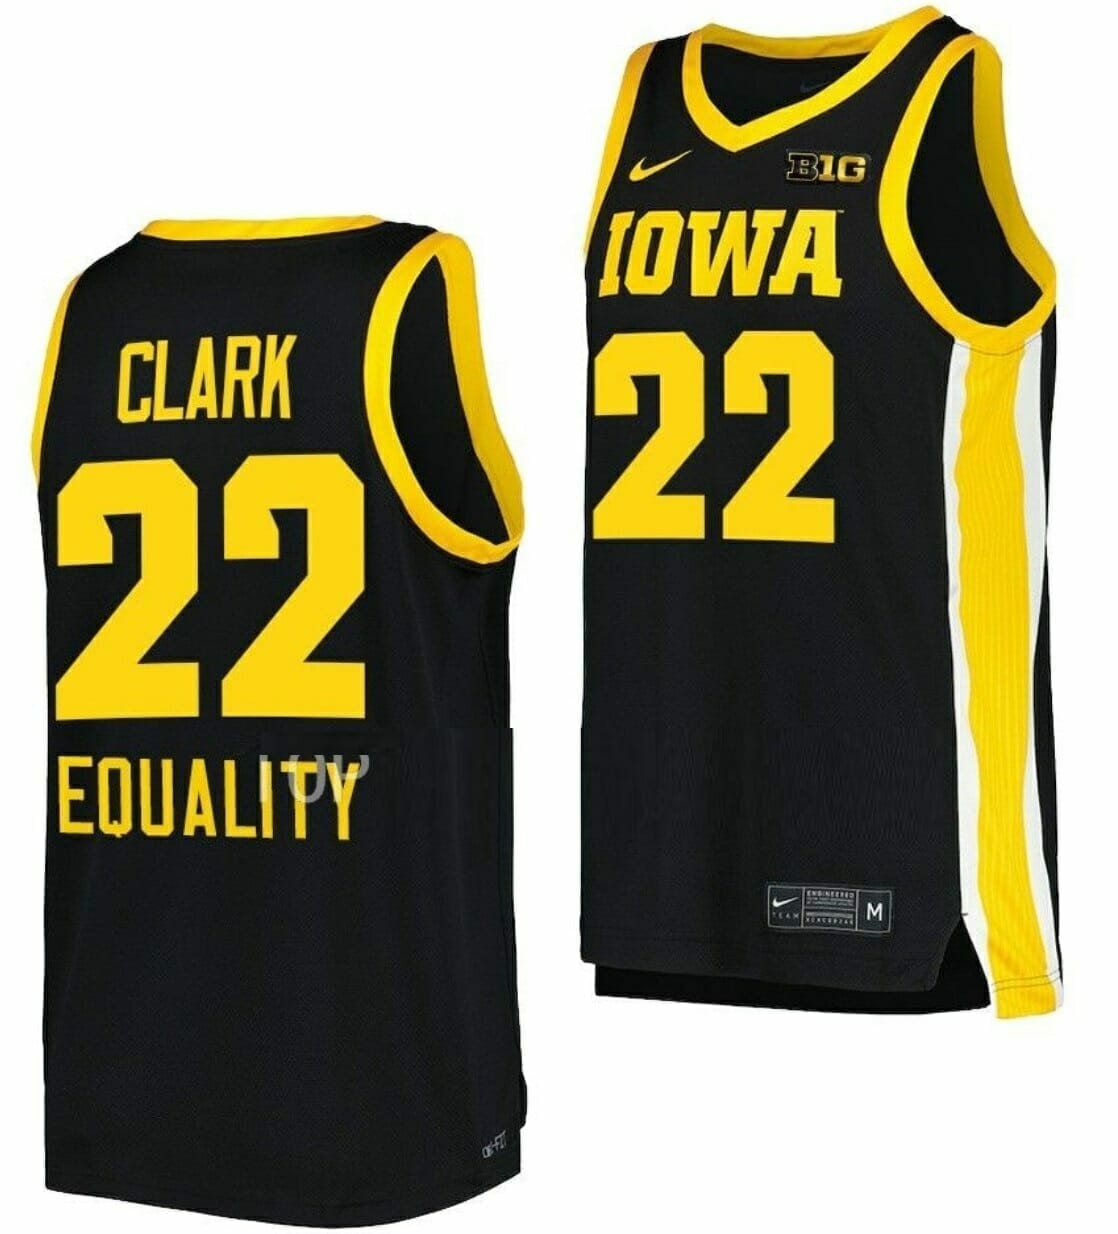 [Available] Buy New Caitlin Clark Jersey Iowa Black 22